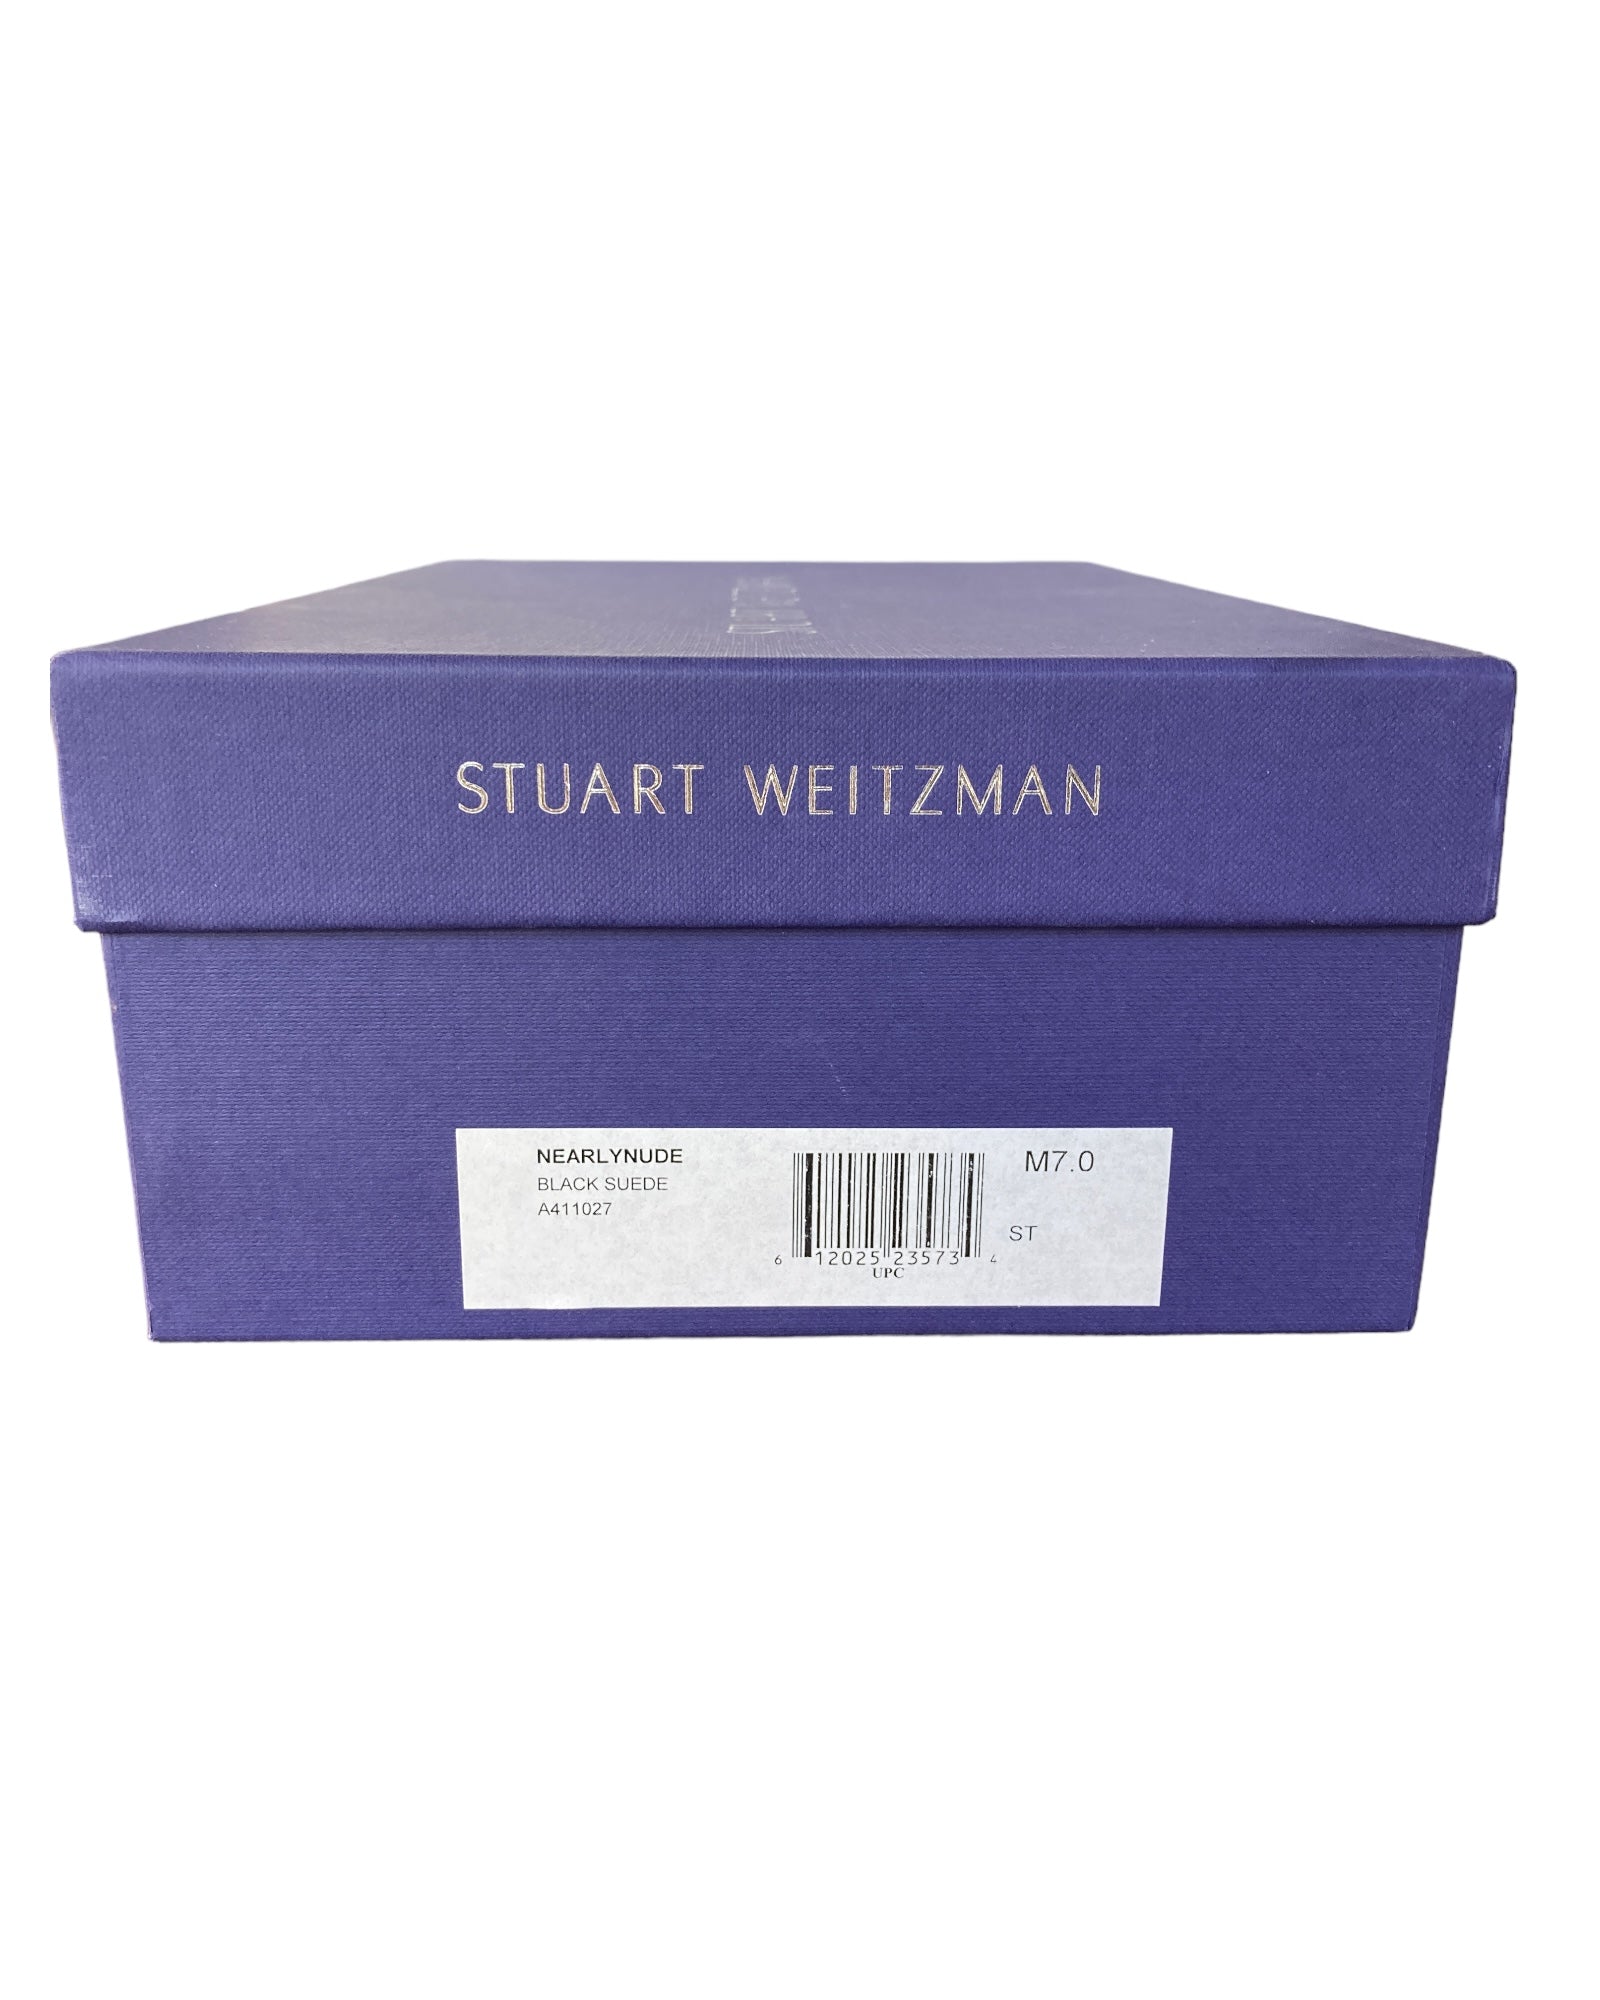 Stuart Weitzman Nearly Nude Black Suede Sandals, 7